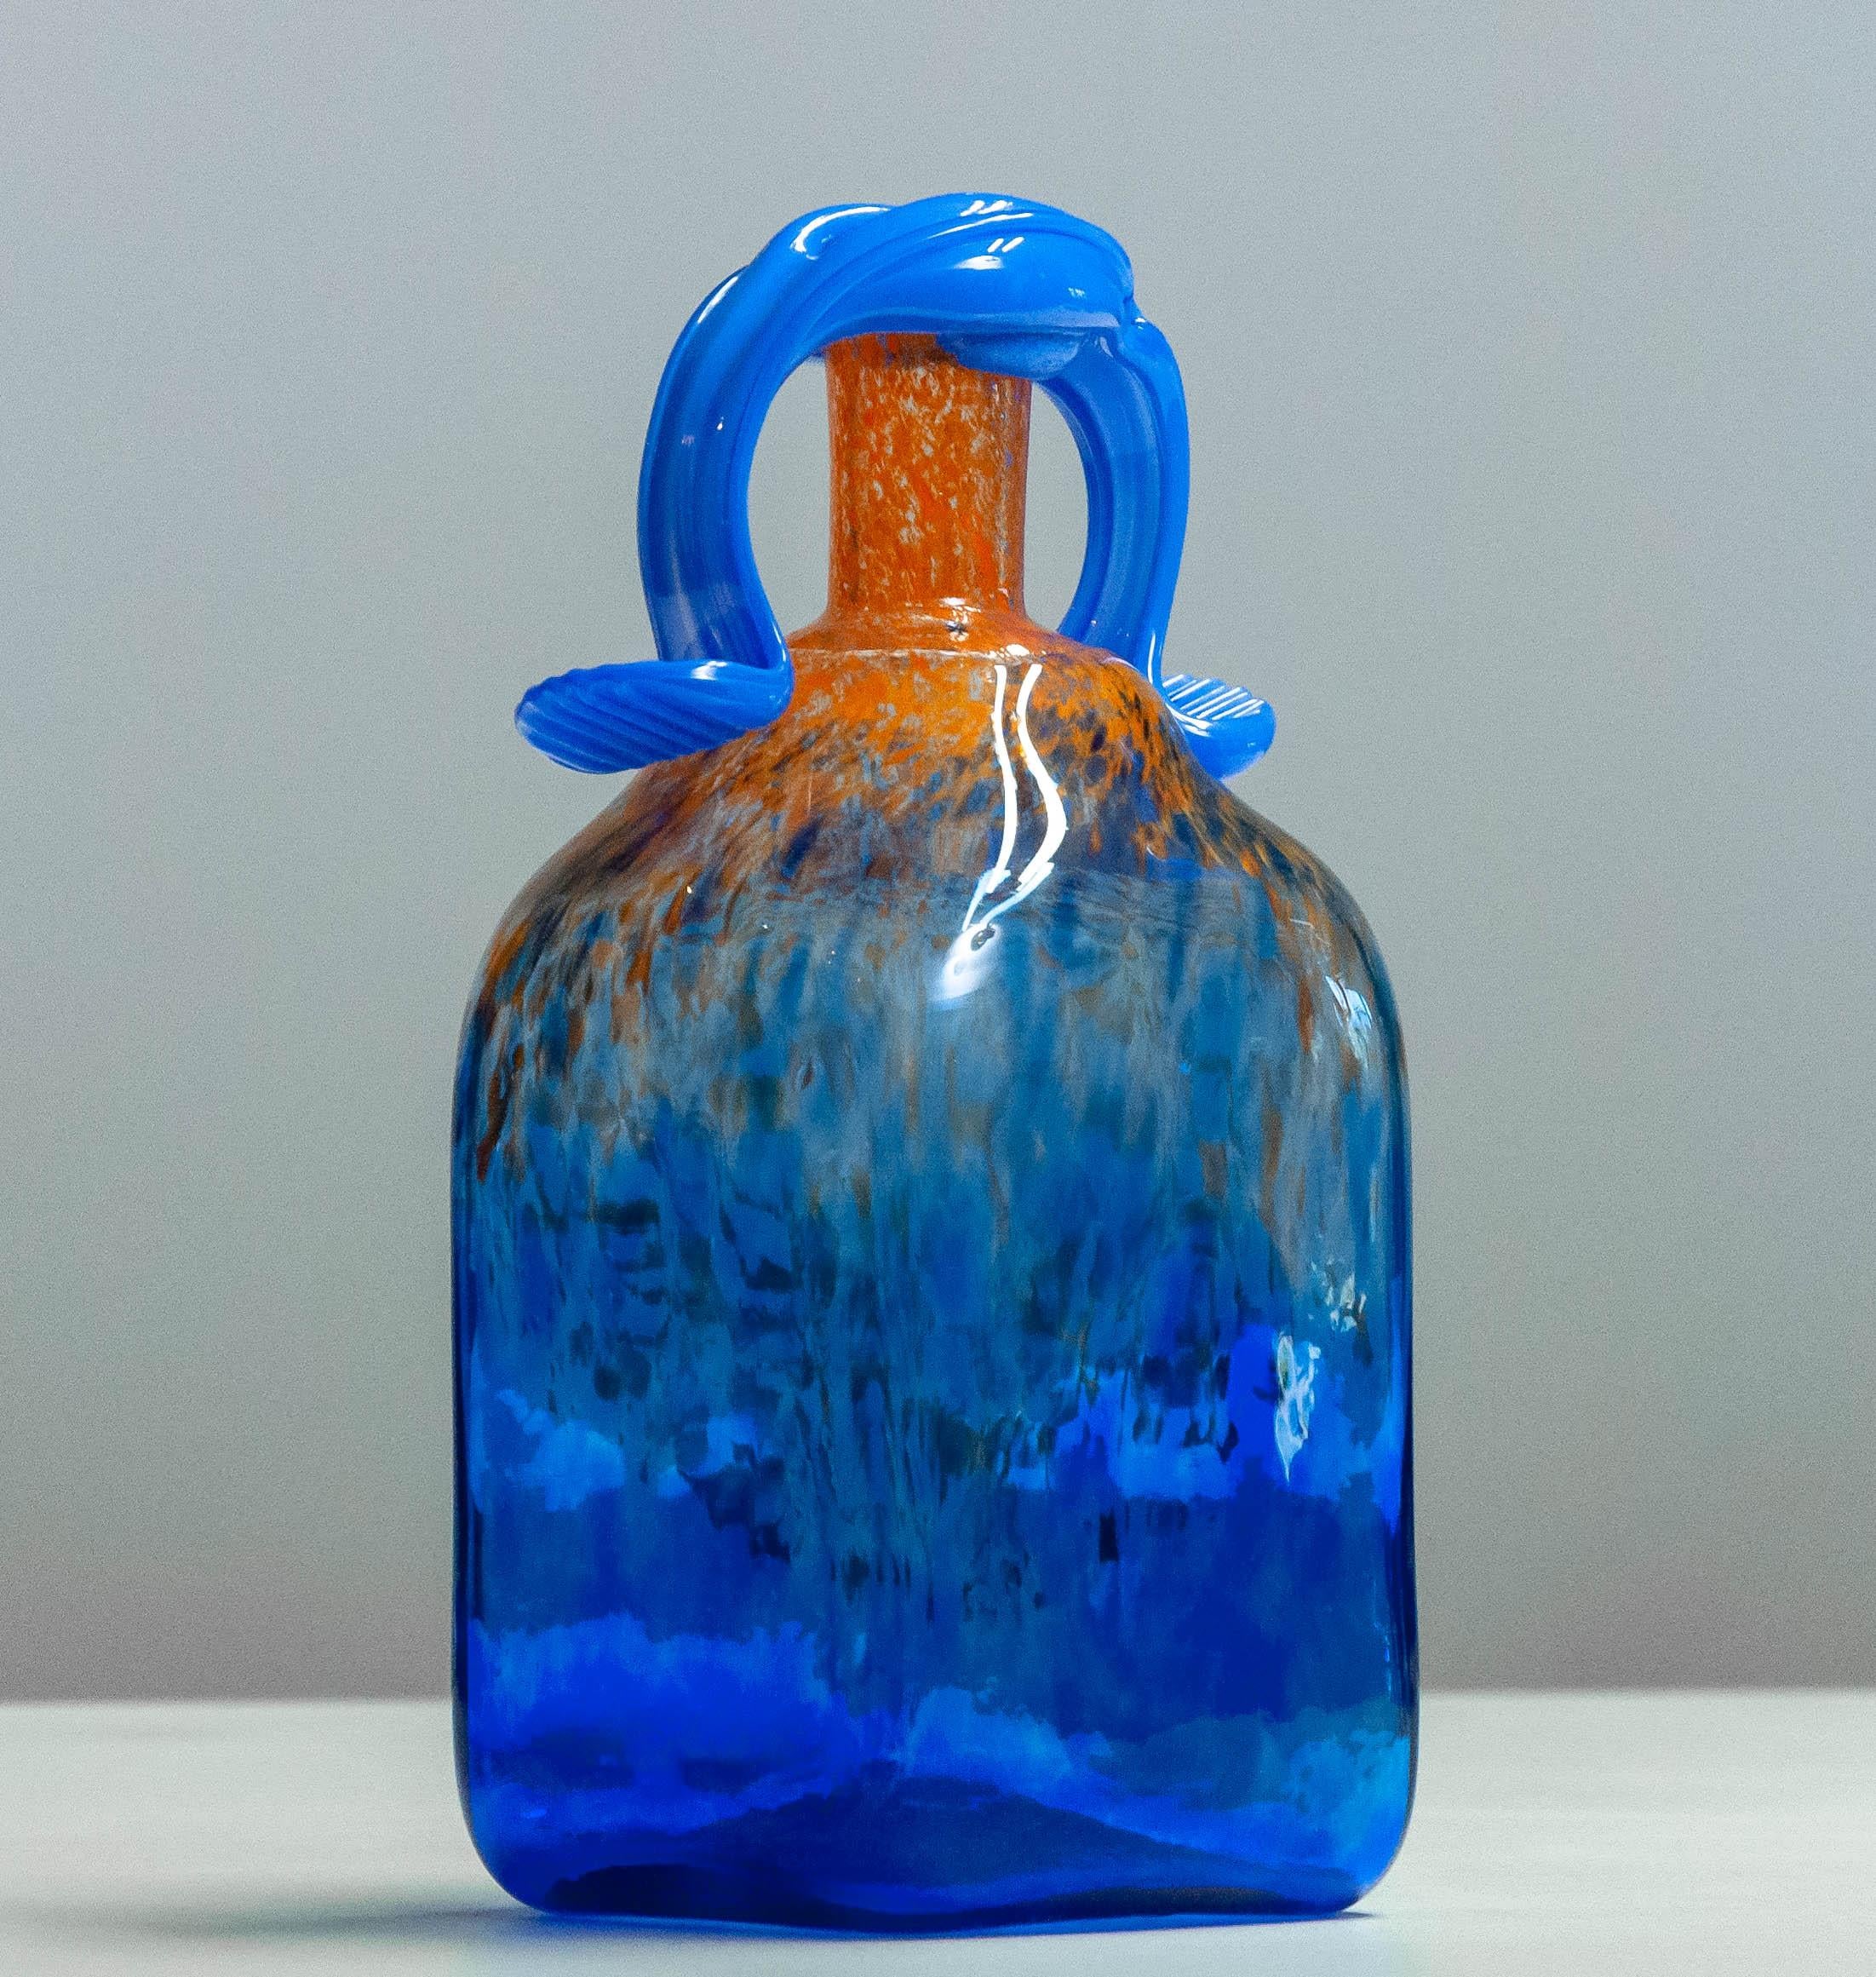 1980s Blue Art Glass Bottle Handmade by Staffan Gellerstedt at Studio Glashyttan For Sale 1